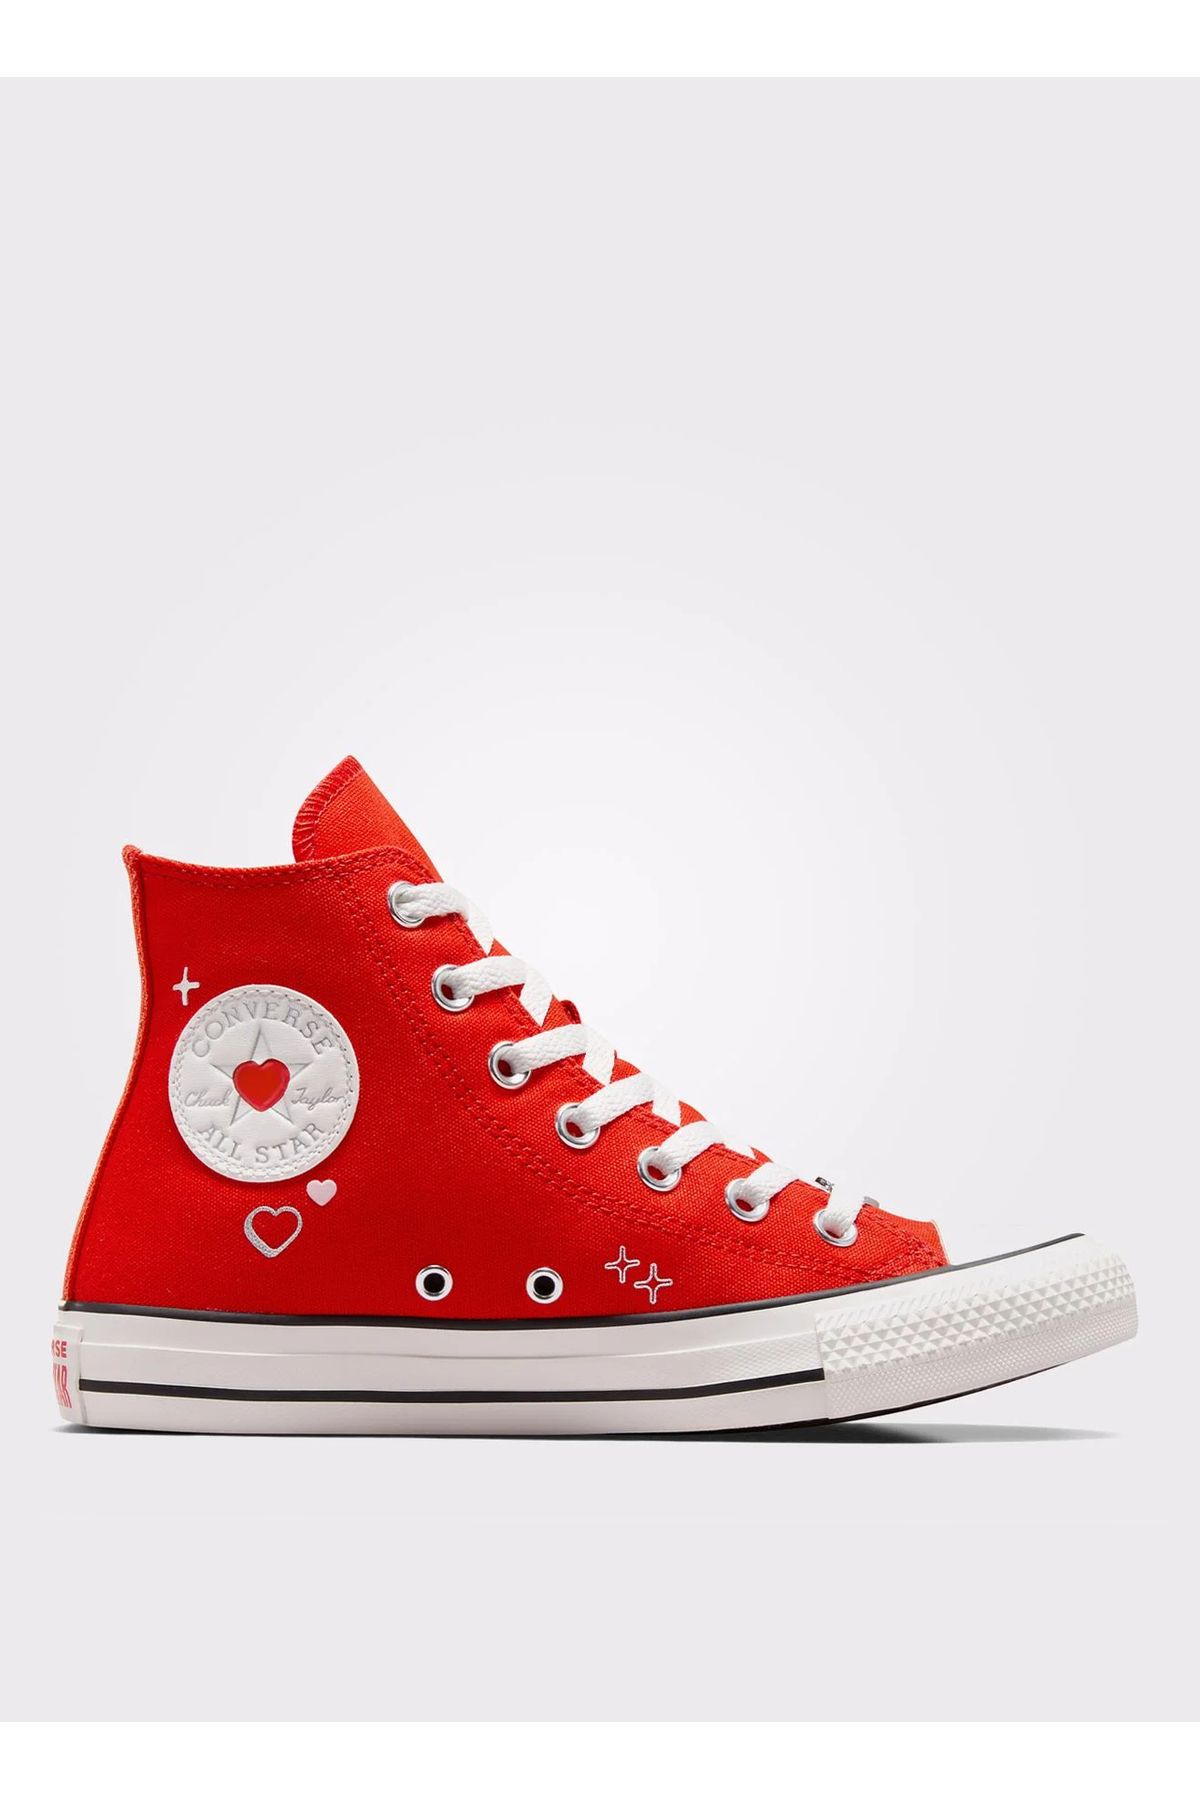 Converse Kırmızı Kadın Deri Lifestyle Ayakkabı A09117C CHUCK TAYLOR ALL STAR